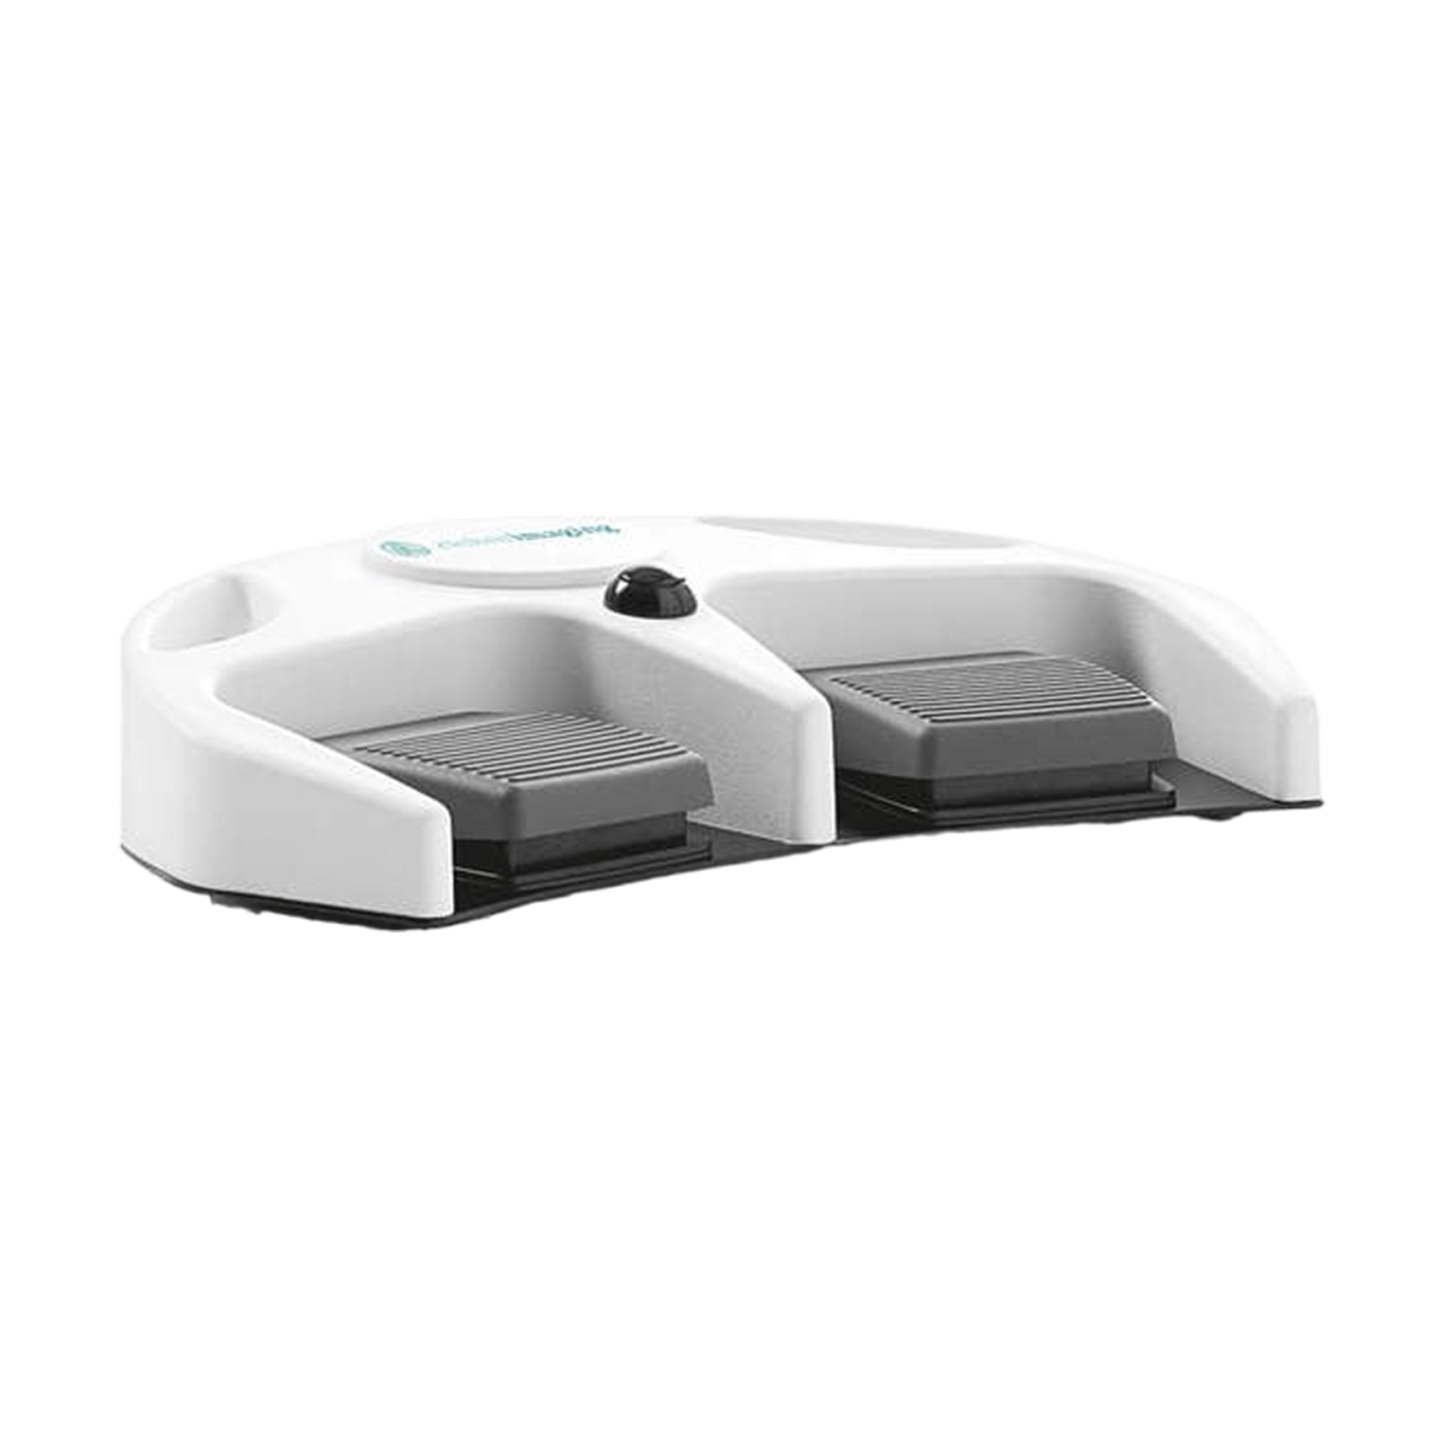 Ziehm Vision RFD 3D Imaging C-Arm System